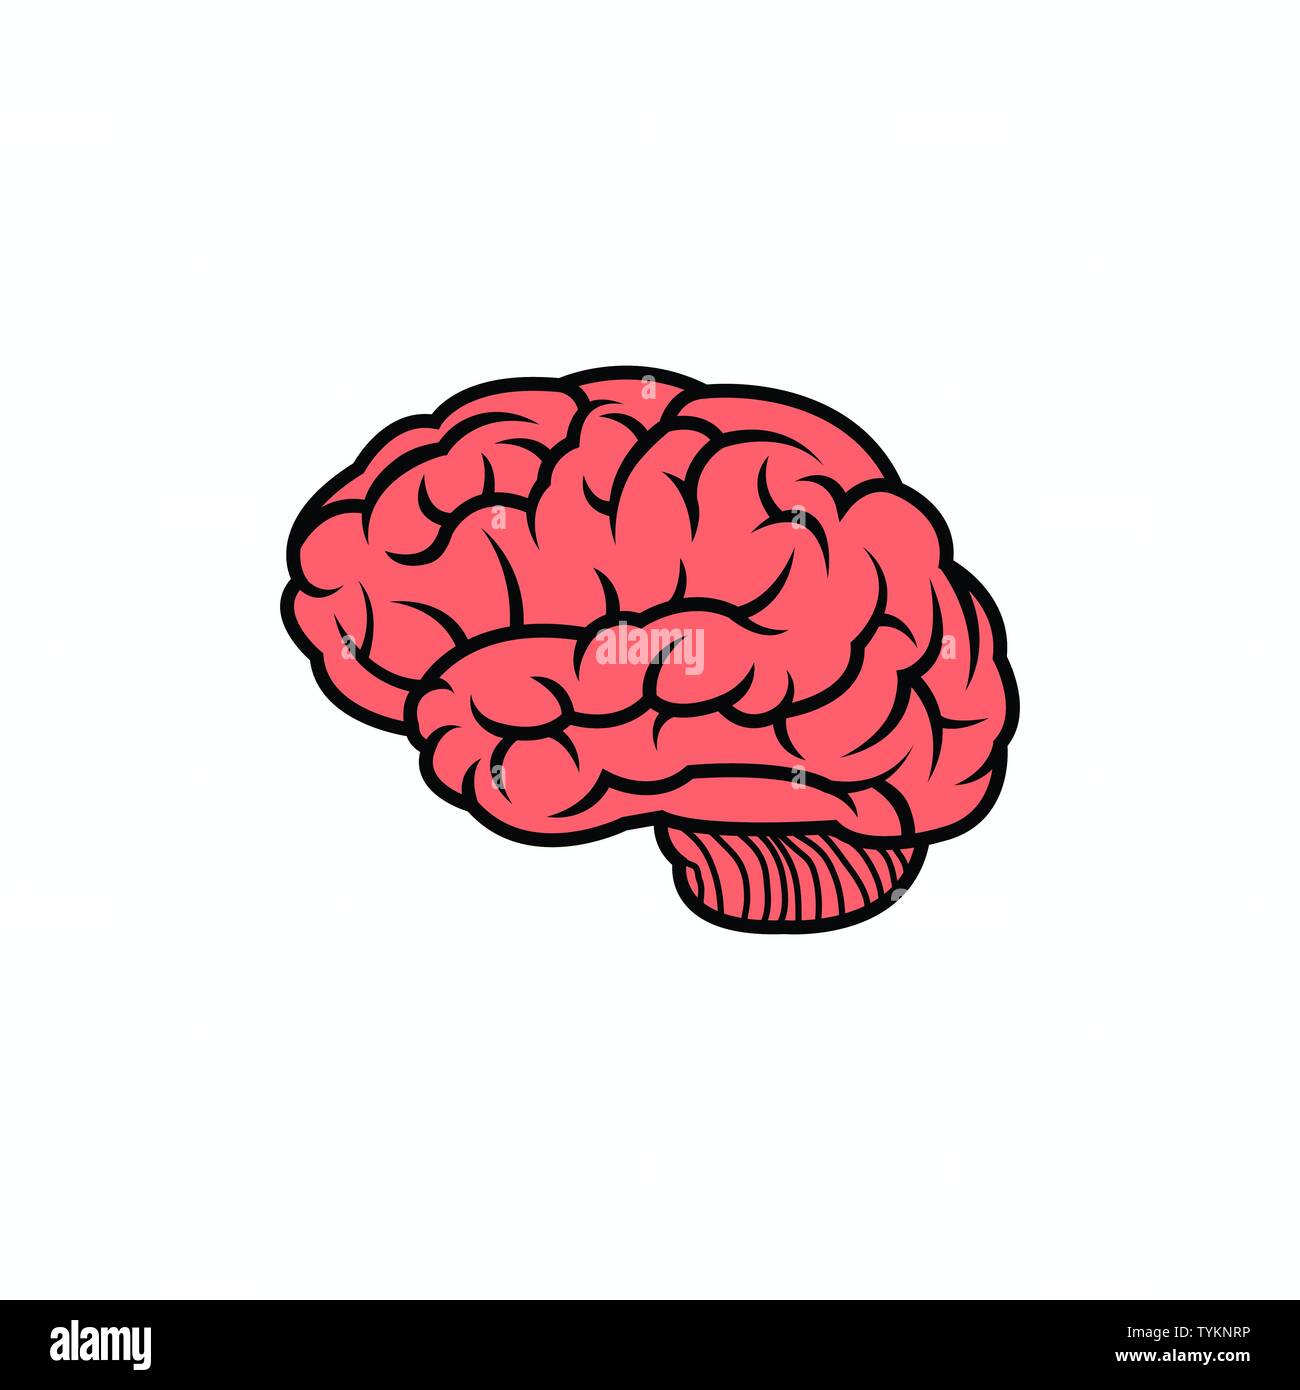 Human brain logo hi-res stock photography and images - Alamy